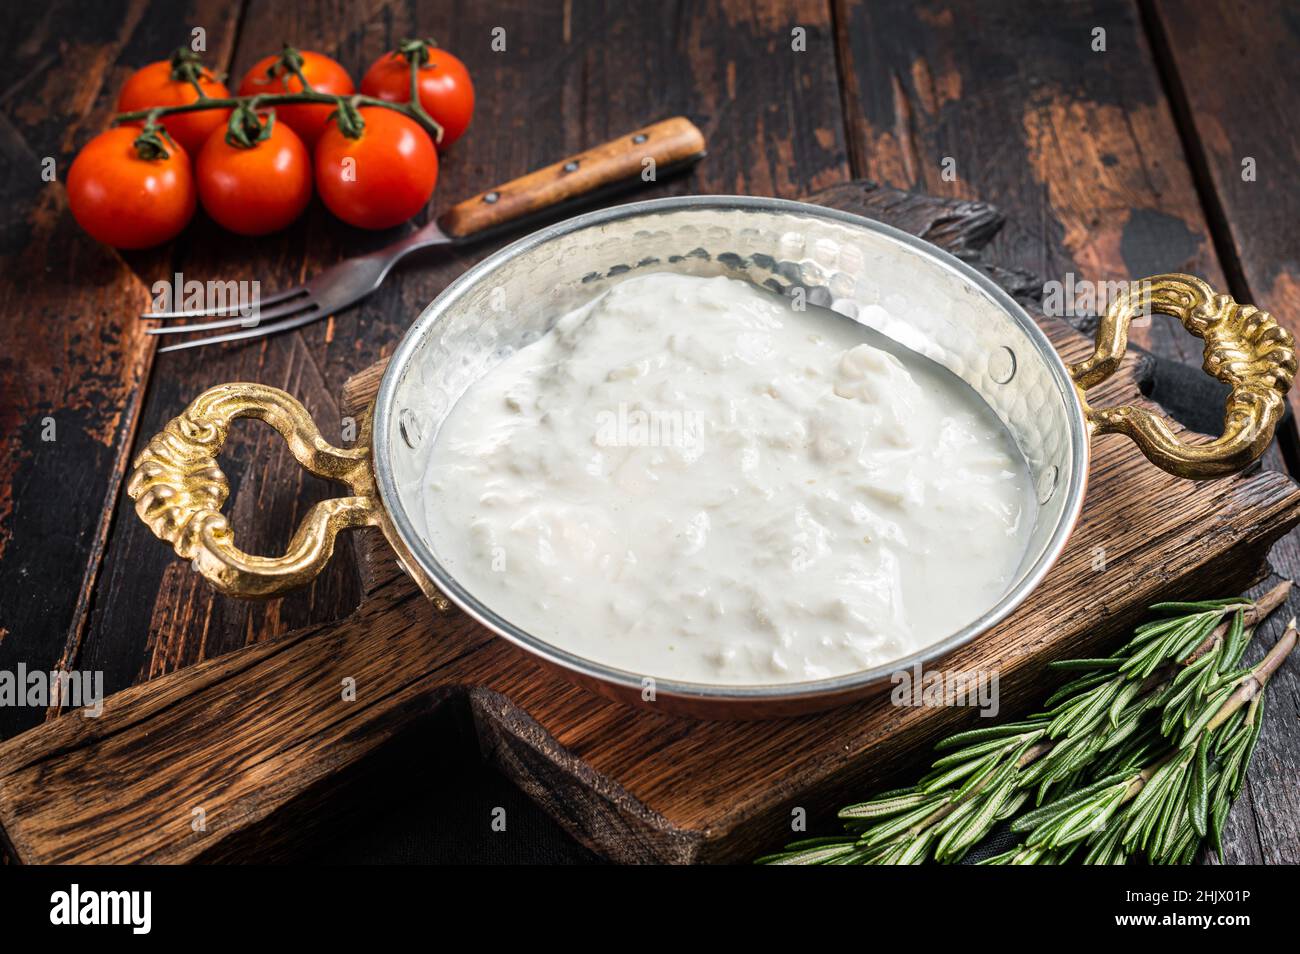 Straciatella fresh italian creamy cheese. Wooden background. Top view Stock Photo